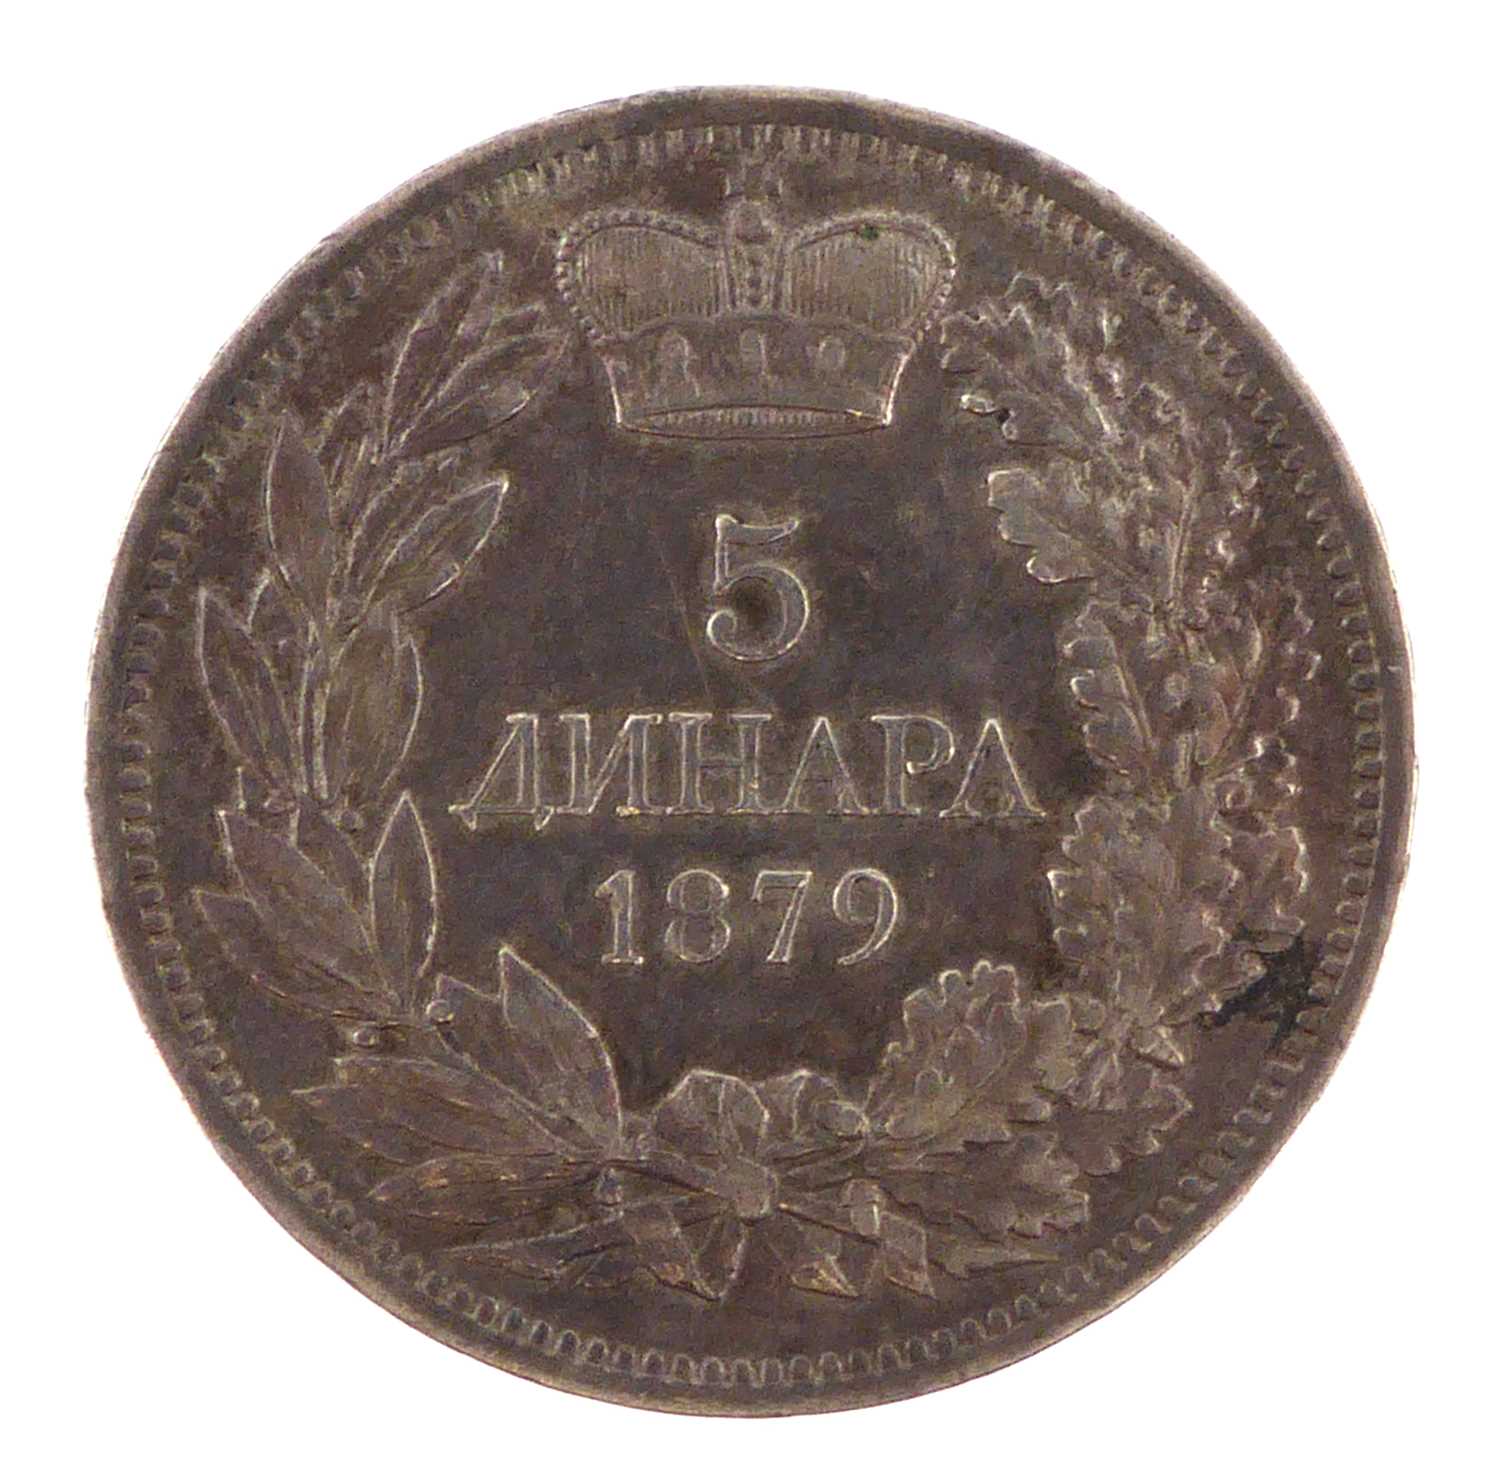 Serbia, Milan, five silver denara coin 1879.Condition Report: Has patina, surface scratches, some